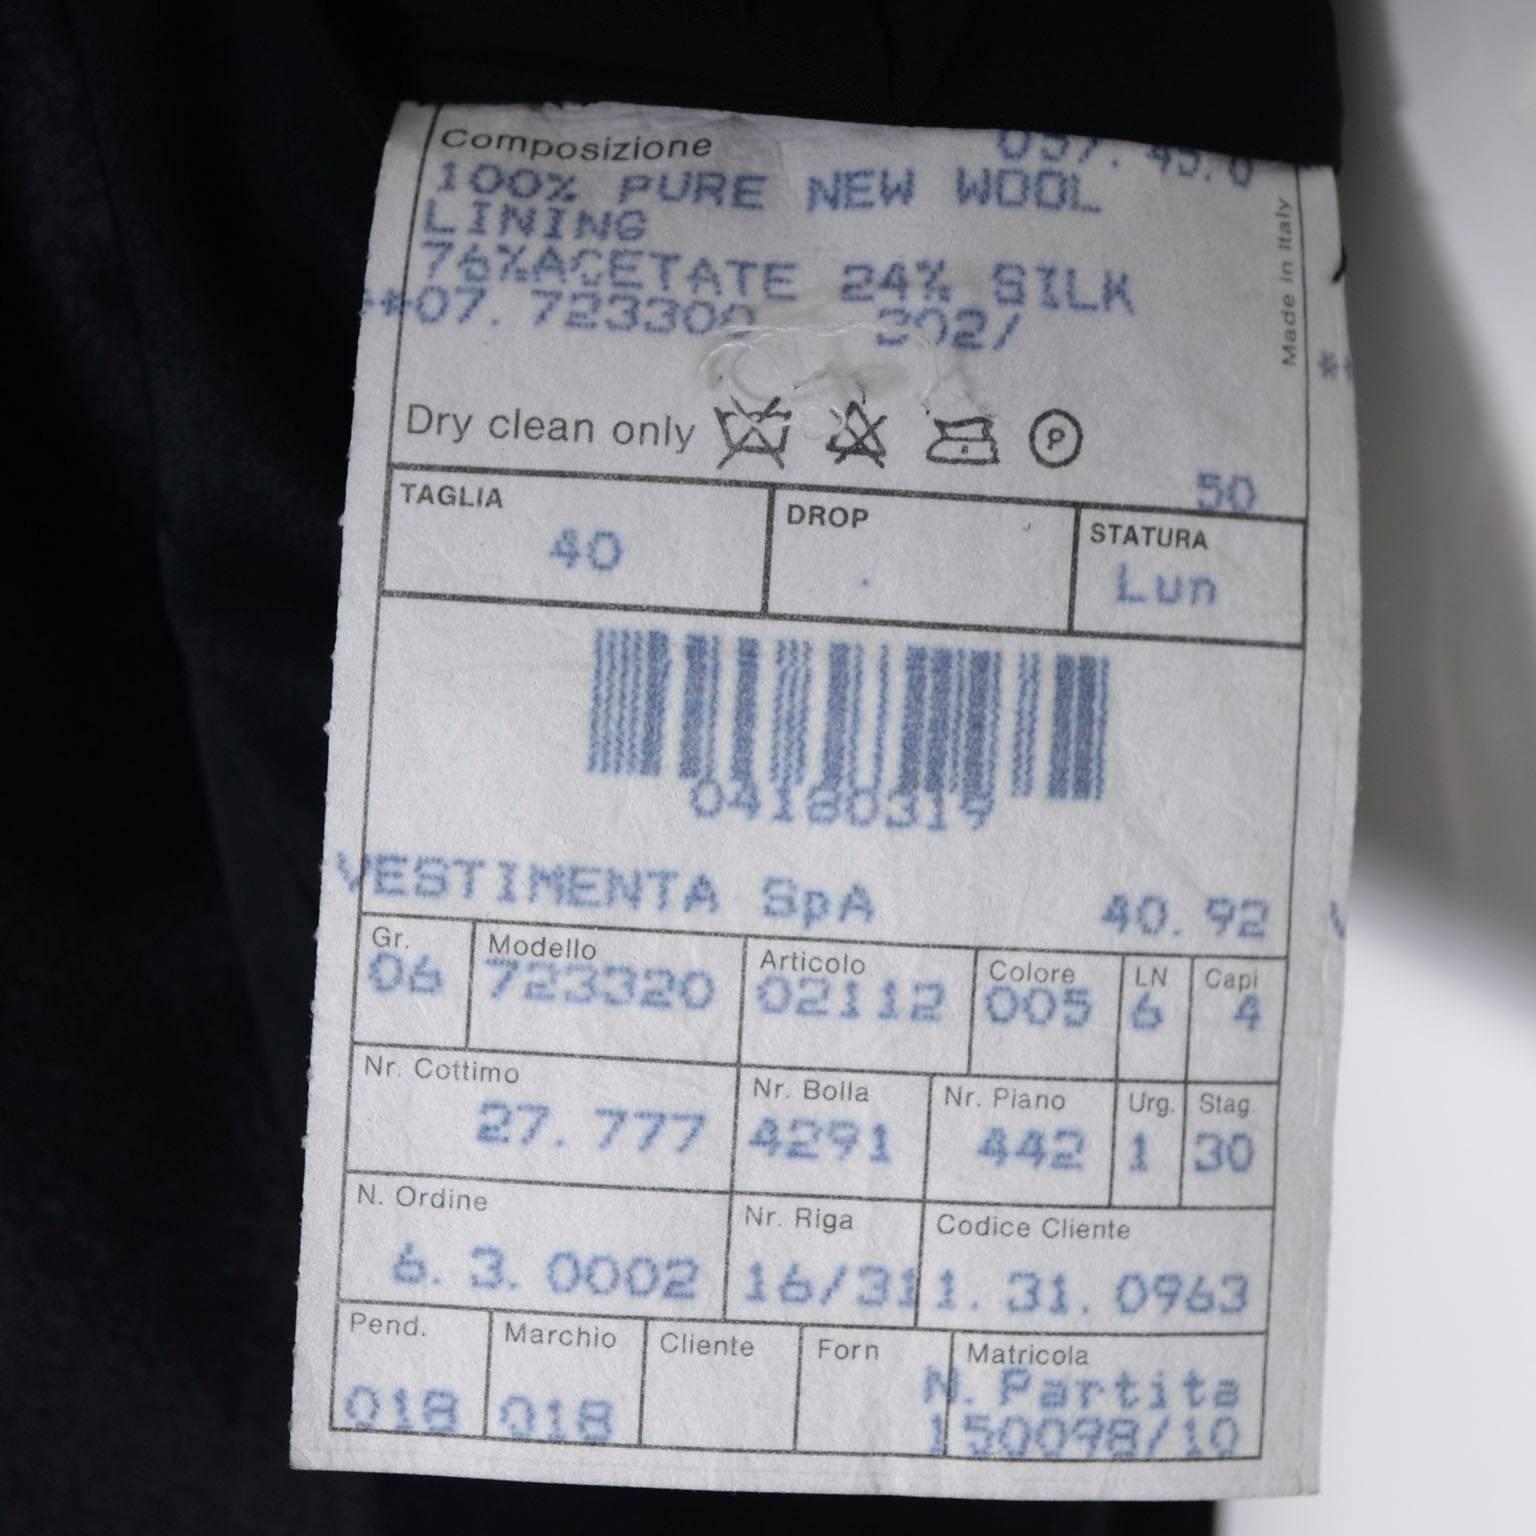 Vintage Giorgio Armani Tuxedo Jacket Shawl Collar Vetimenta Spa Black Label 2